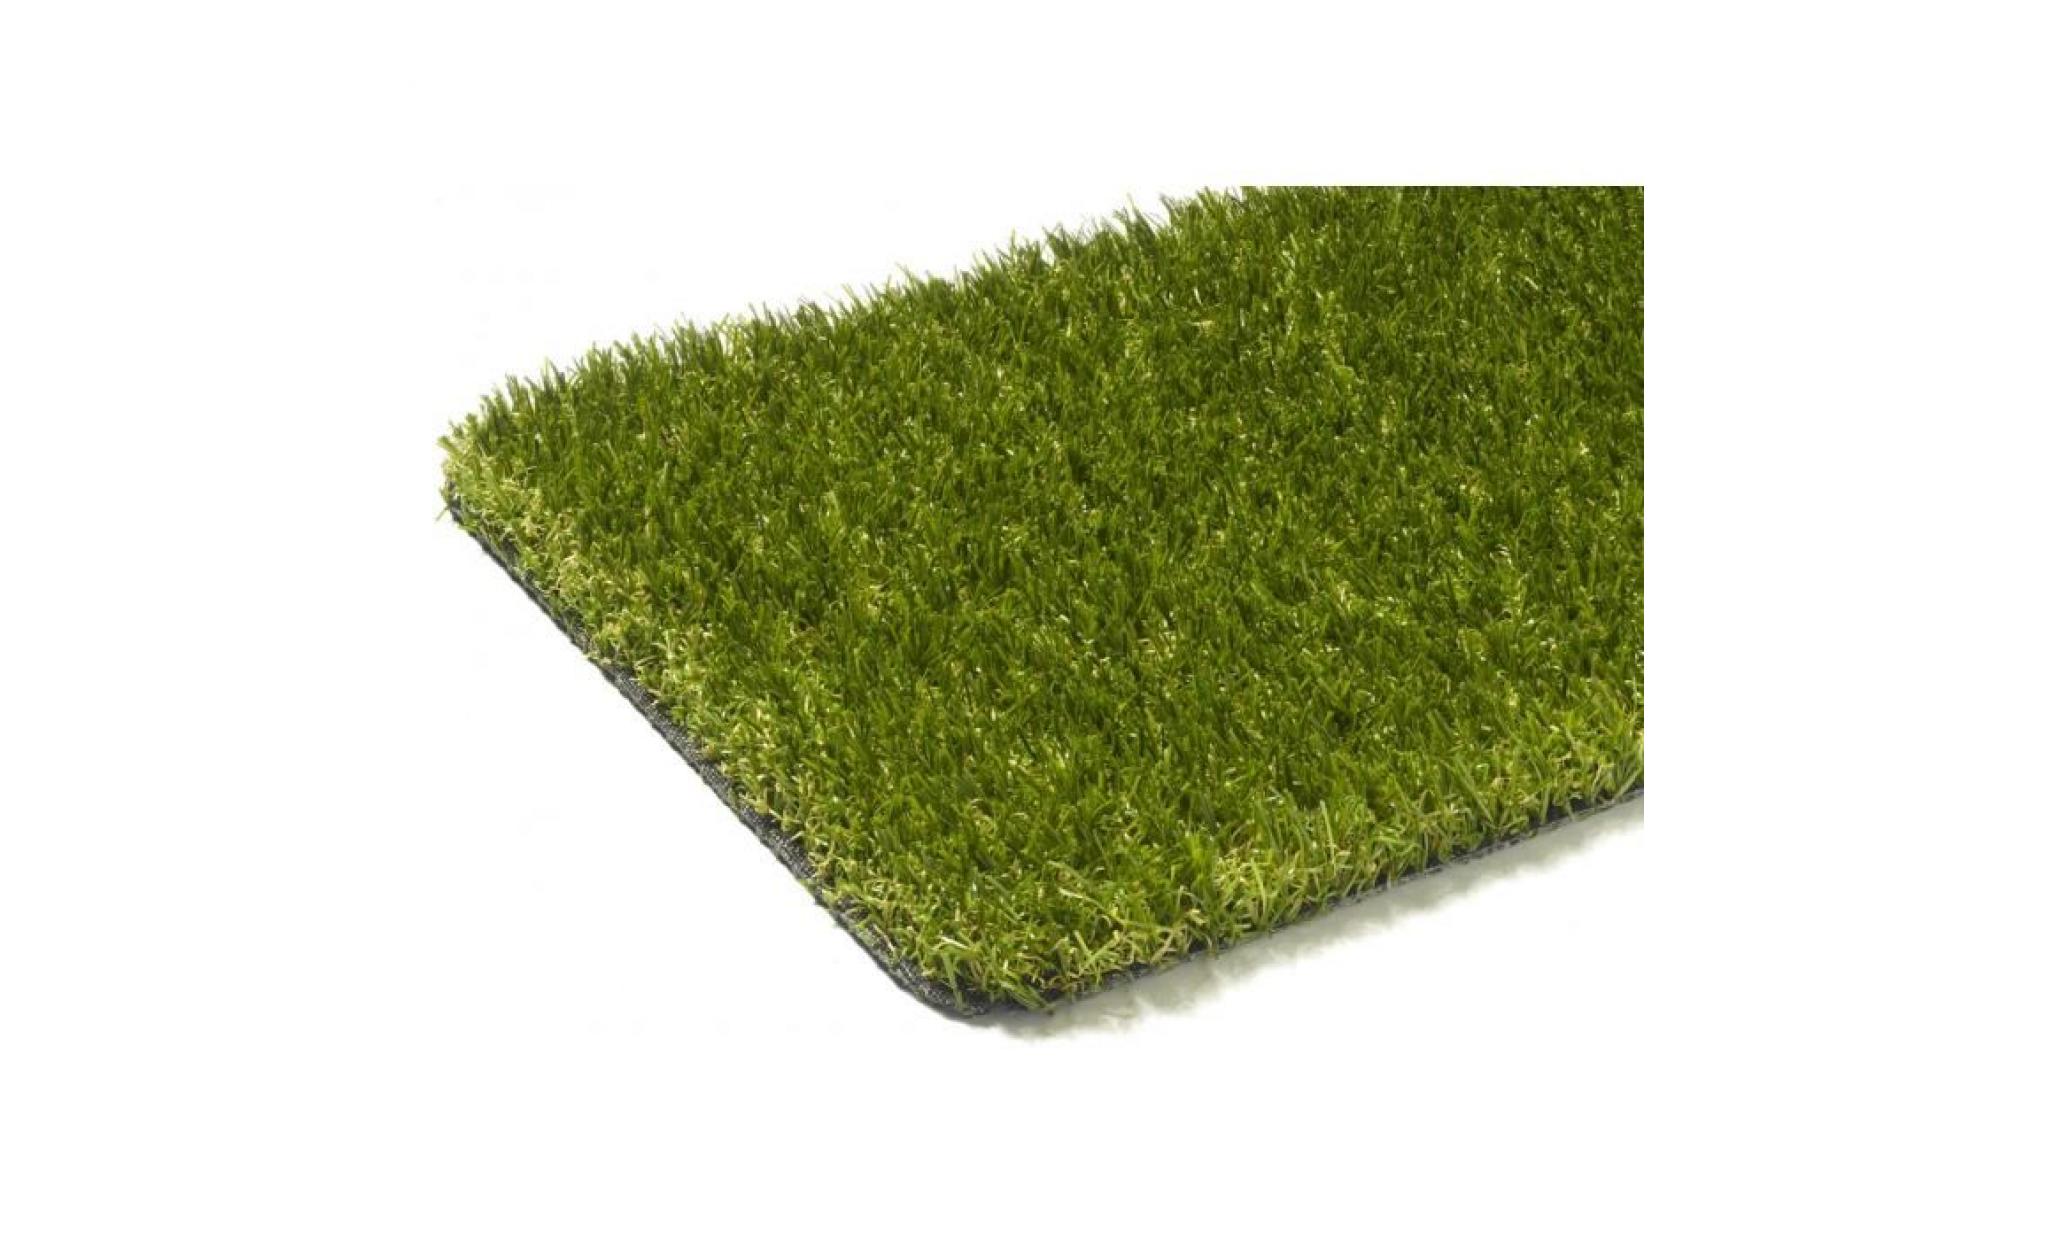 chelsea   tapis type luxe gazon artificiel – pour jardin, terrasse, balcon   vert  [200x150 cm]